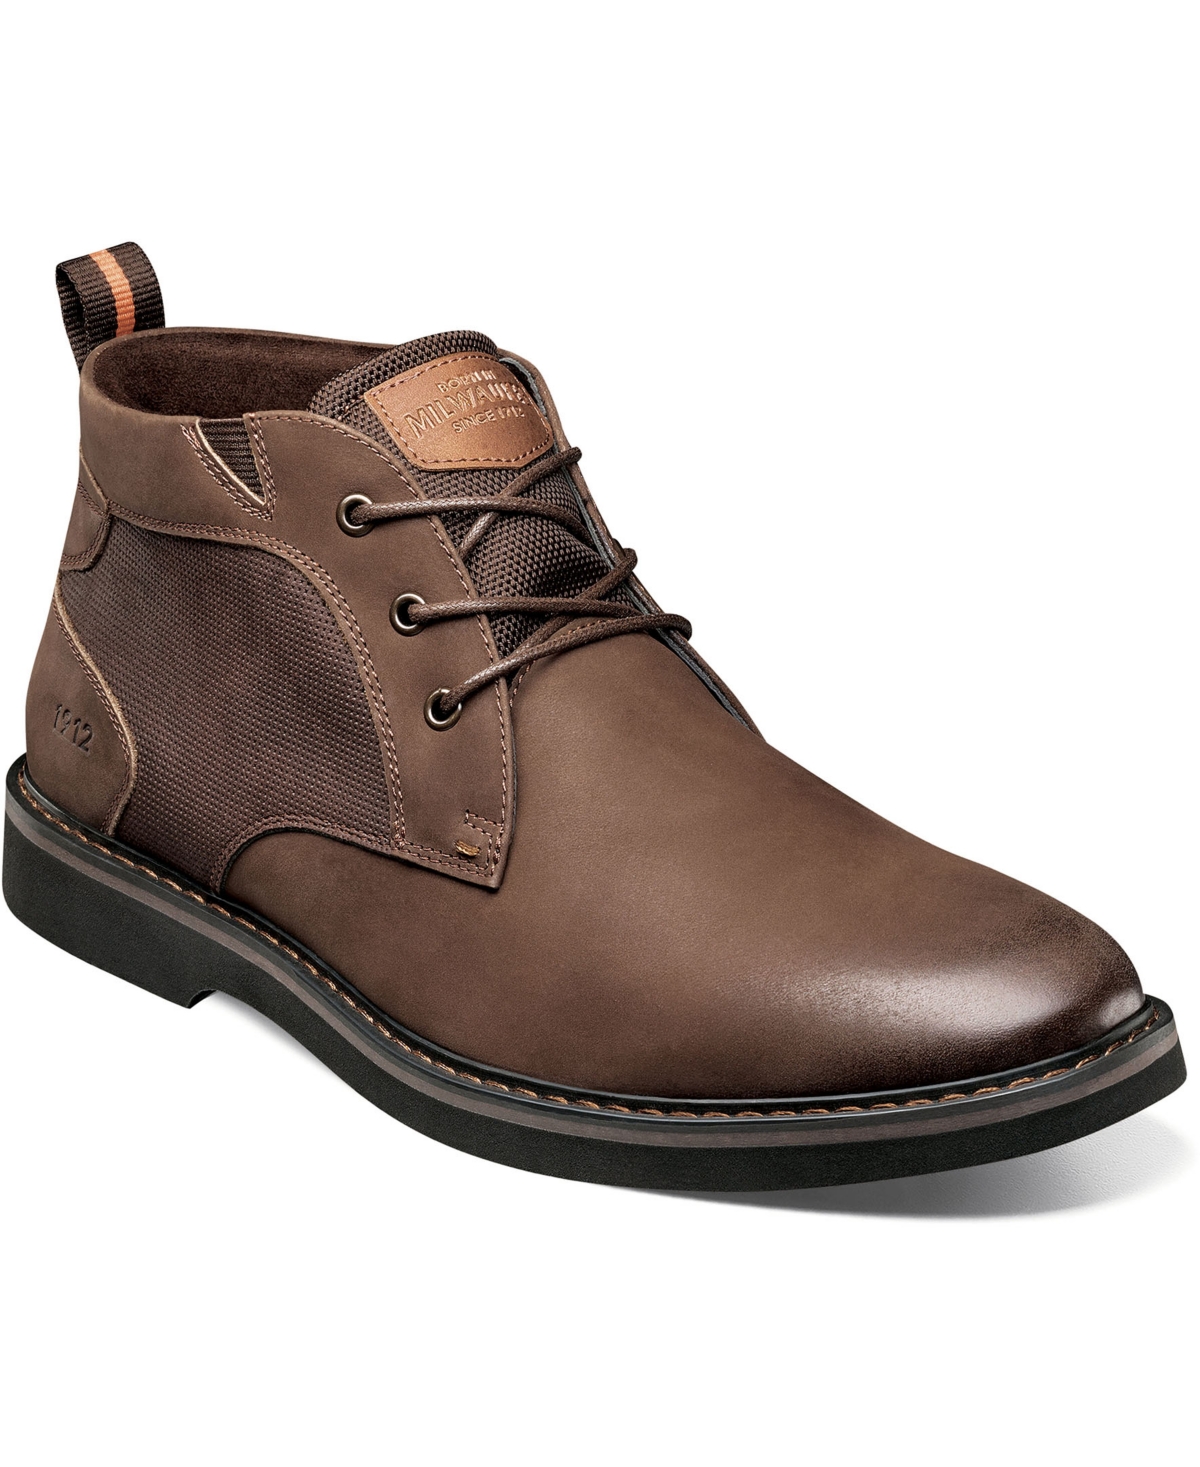 Men's Denali Waterproof Leather Plain Toe Boots - Dark Brown